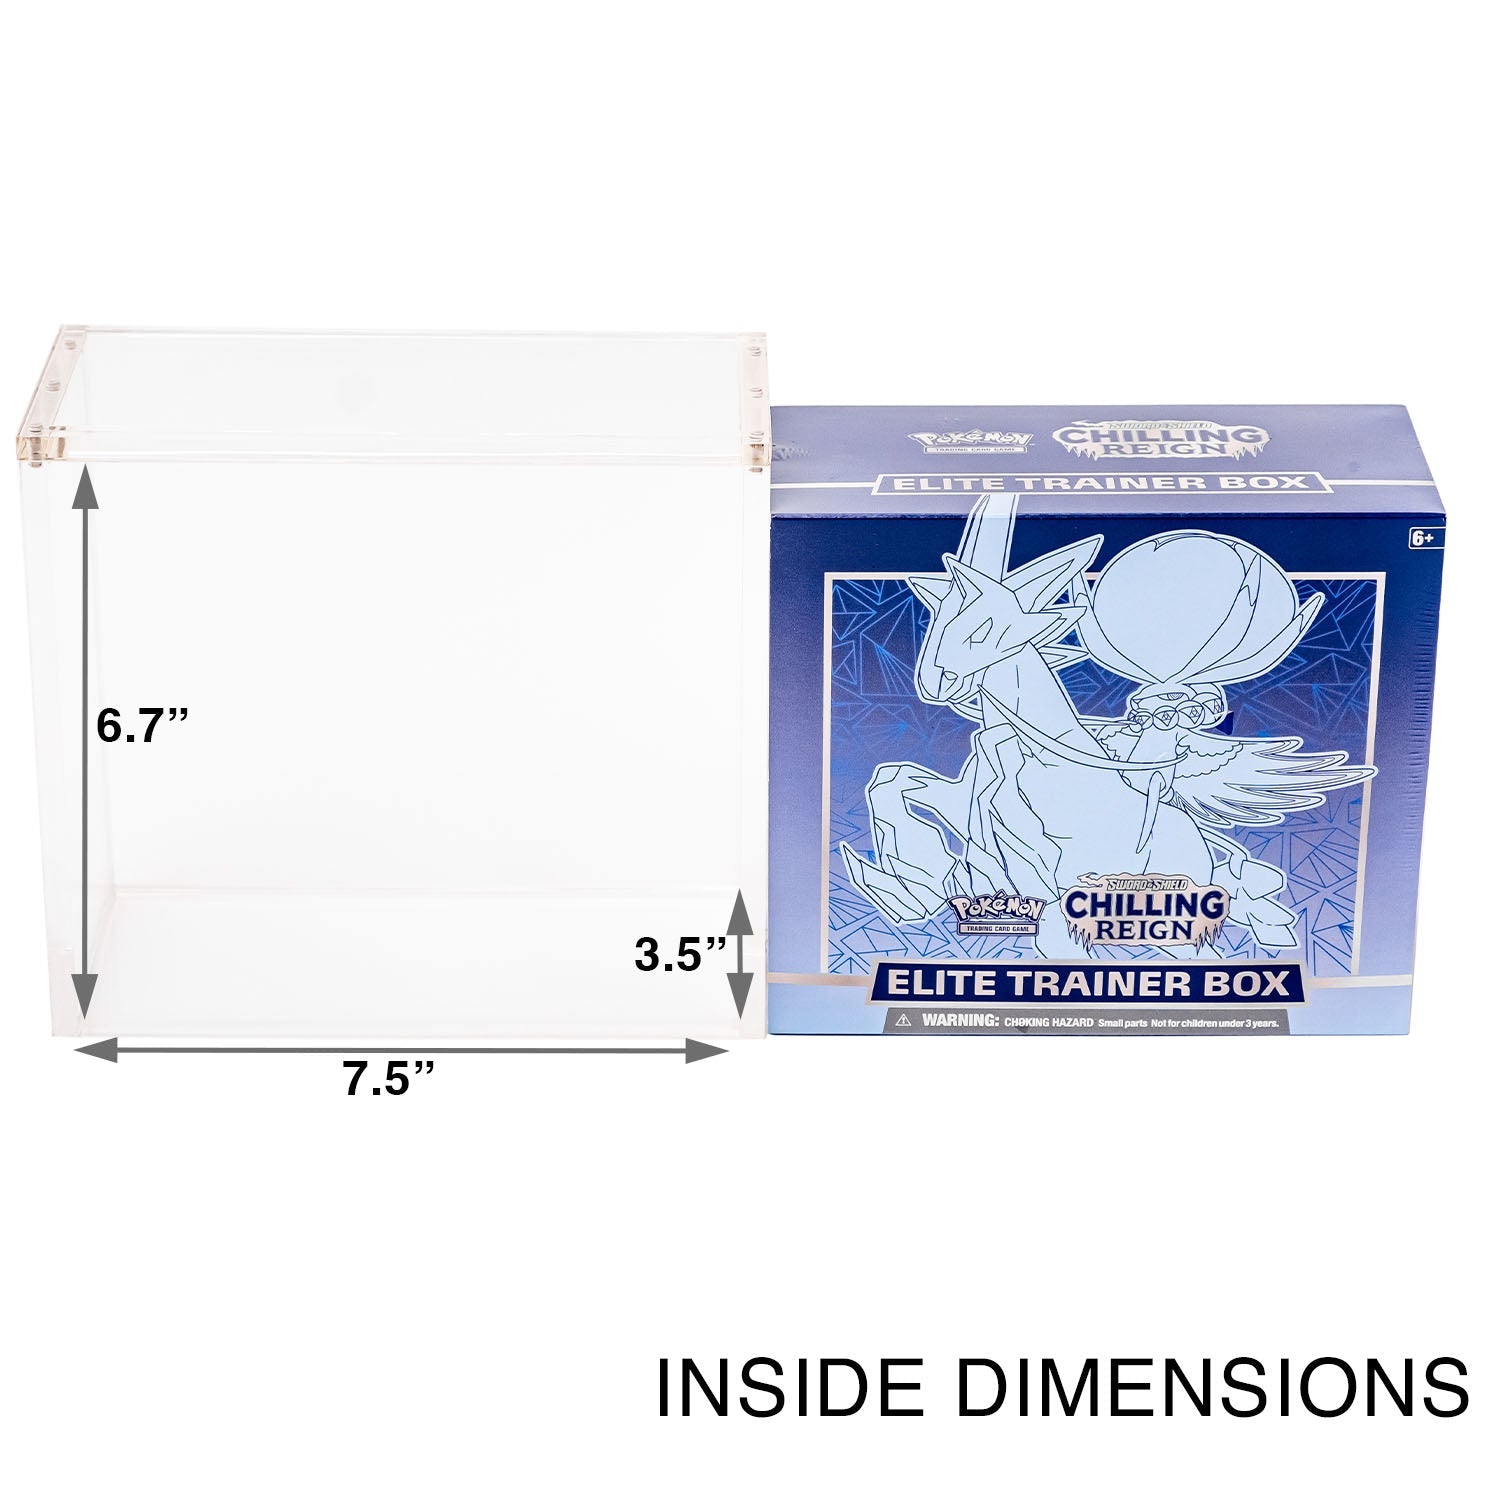 Premium Acrylic Case for Pokemon Elite Trainer Box with Magnetic Top